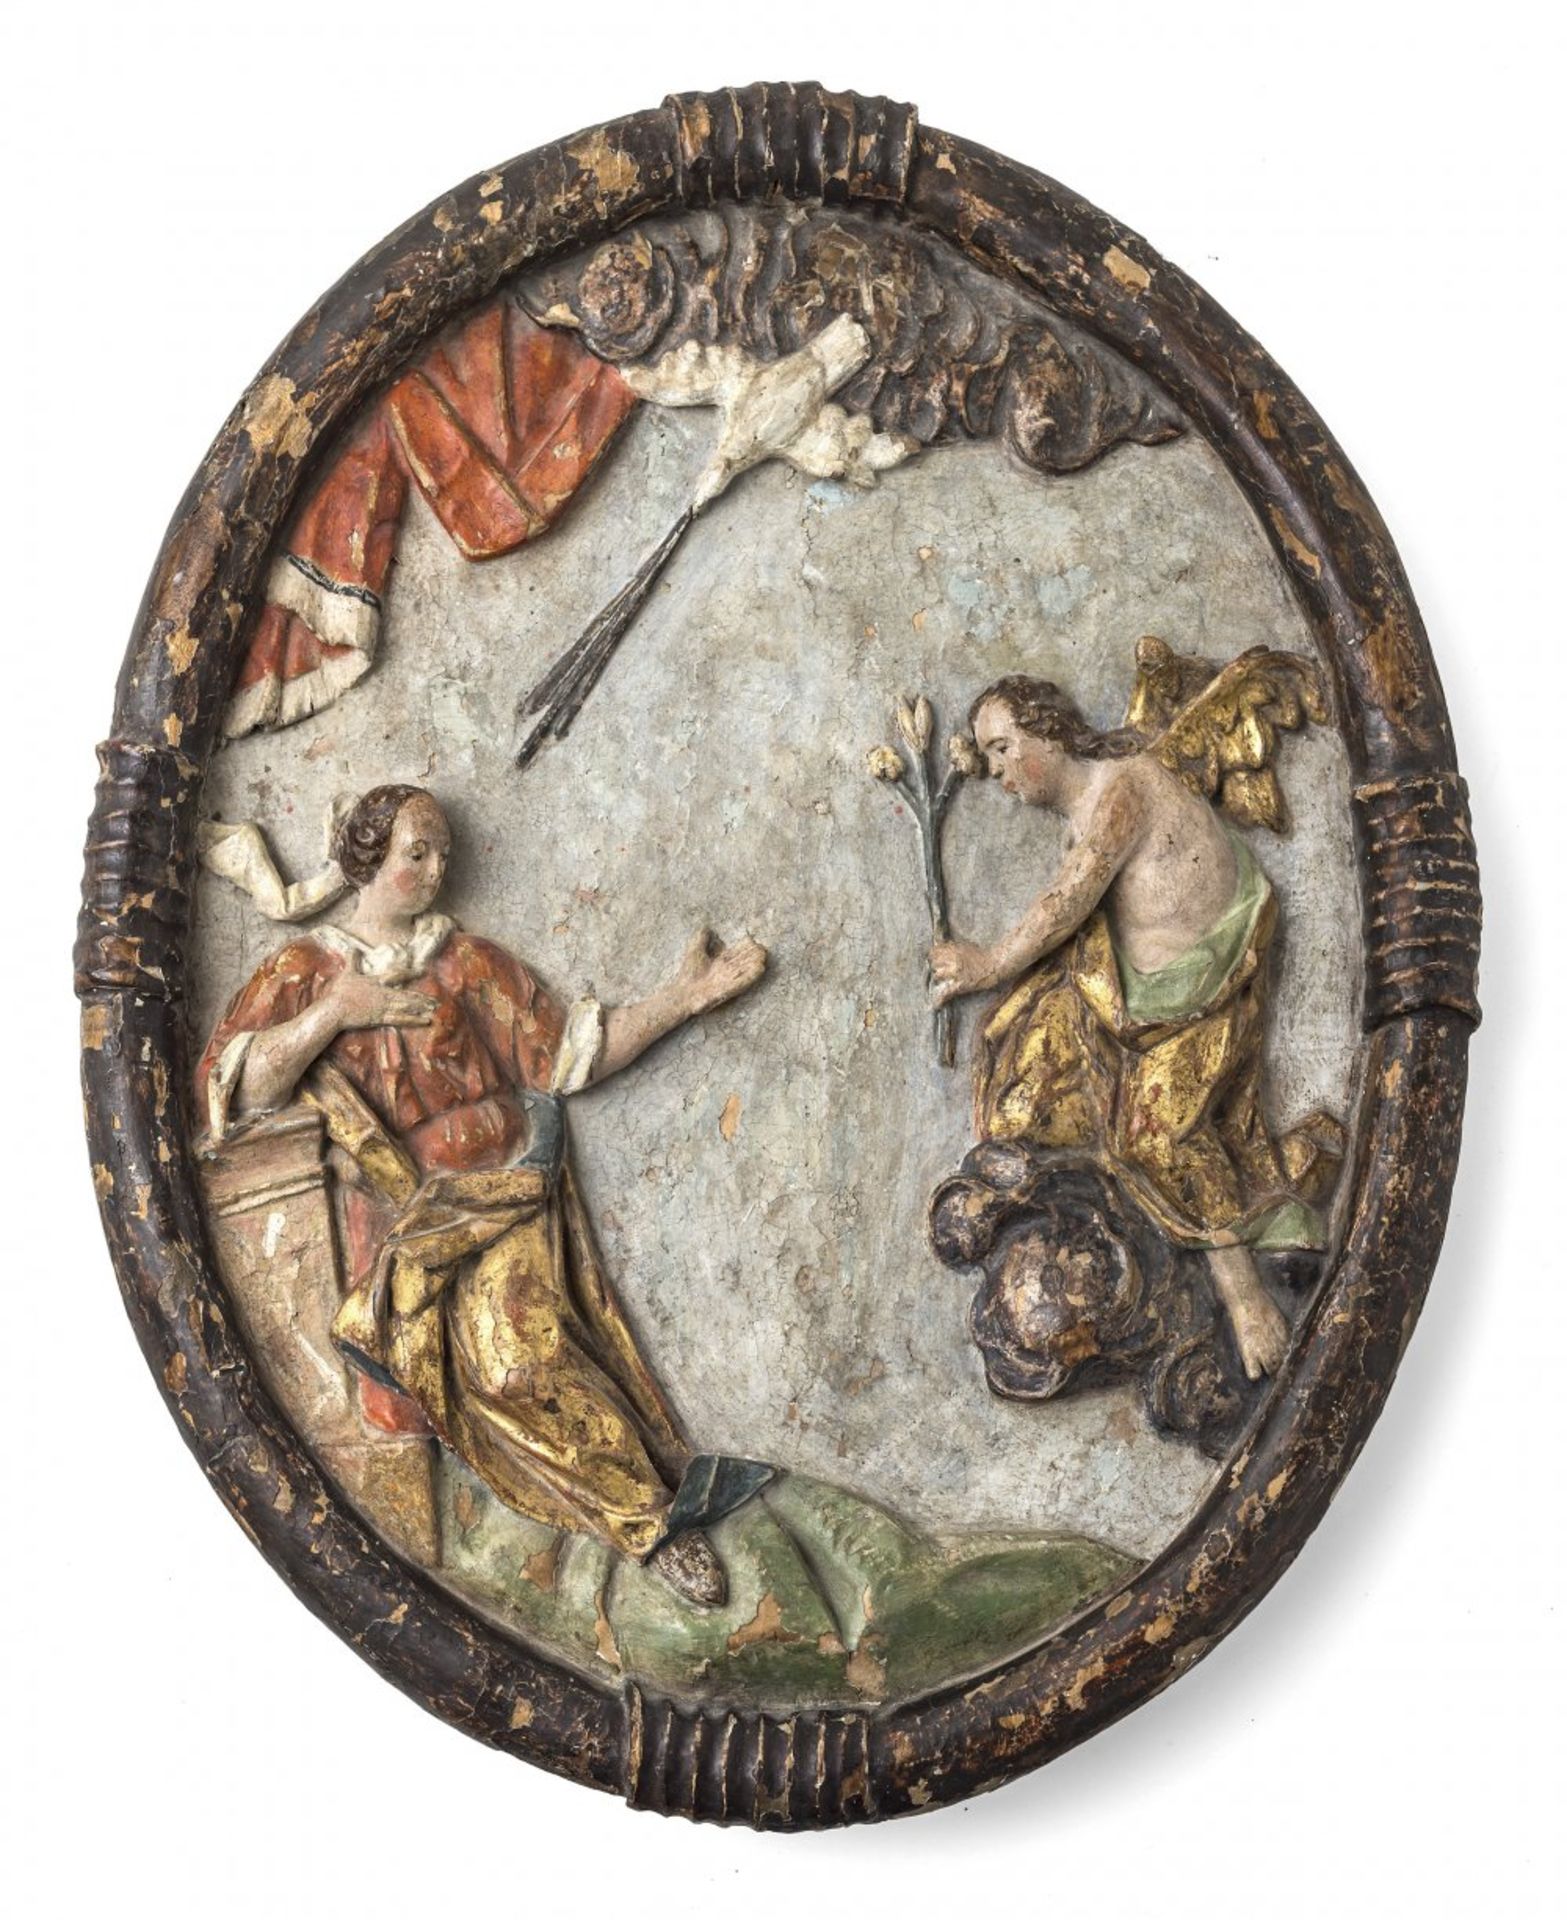 Mariä Verkündigung.München, um 1750. Holz, übergangene Farbfassung. ø 36,5 cm. Rest., erg.